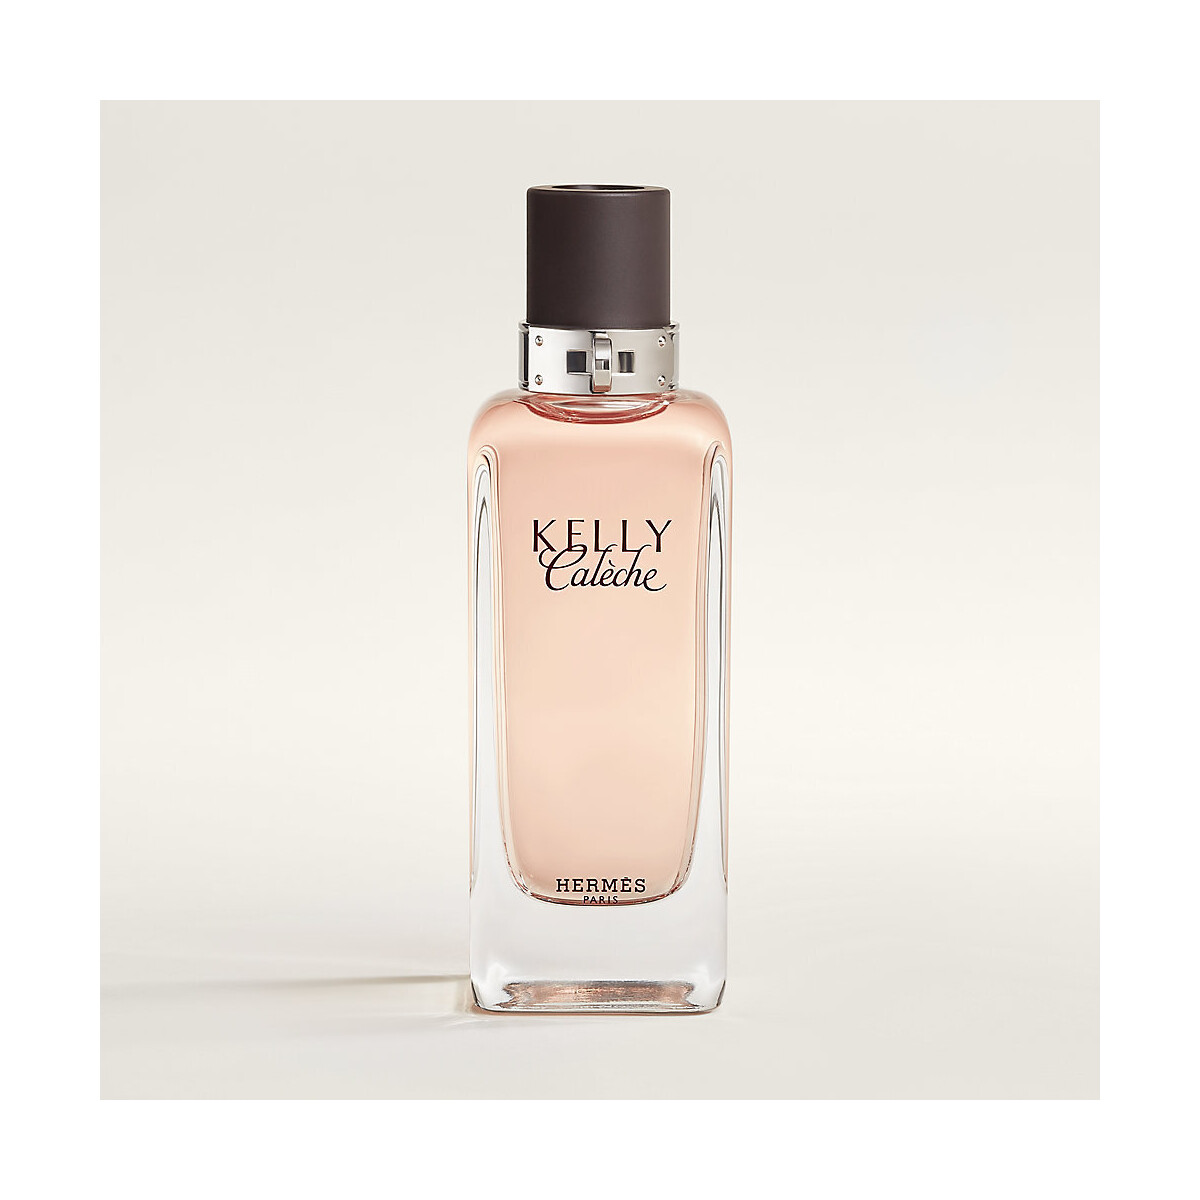 Belleza Mujer Perfume Hermès Paris Kelly Caleche - Eau de Parfum - 100ml - Vaporizador Kelly Caleche - perfume - 100ml - spray